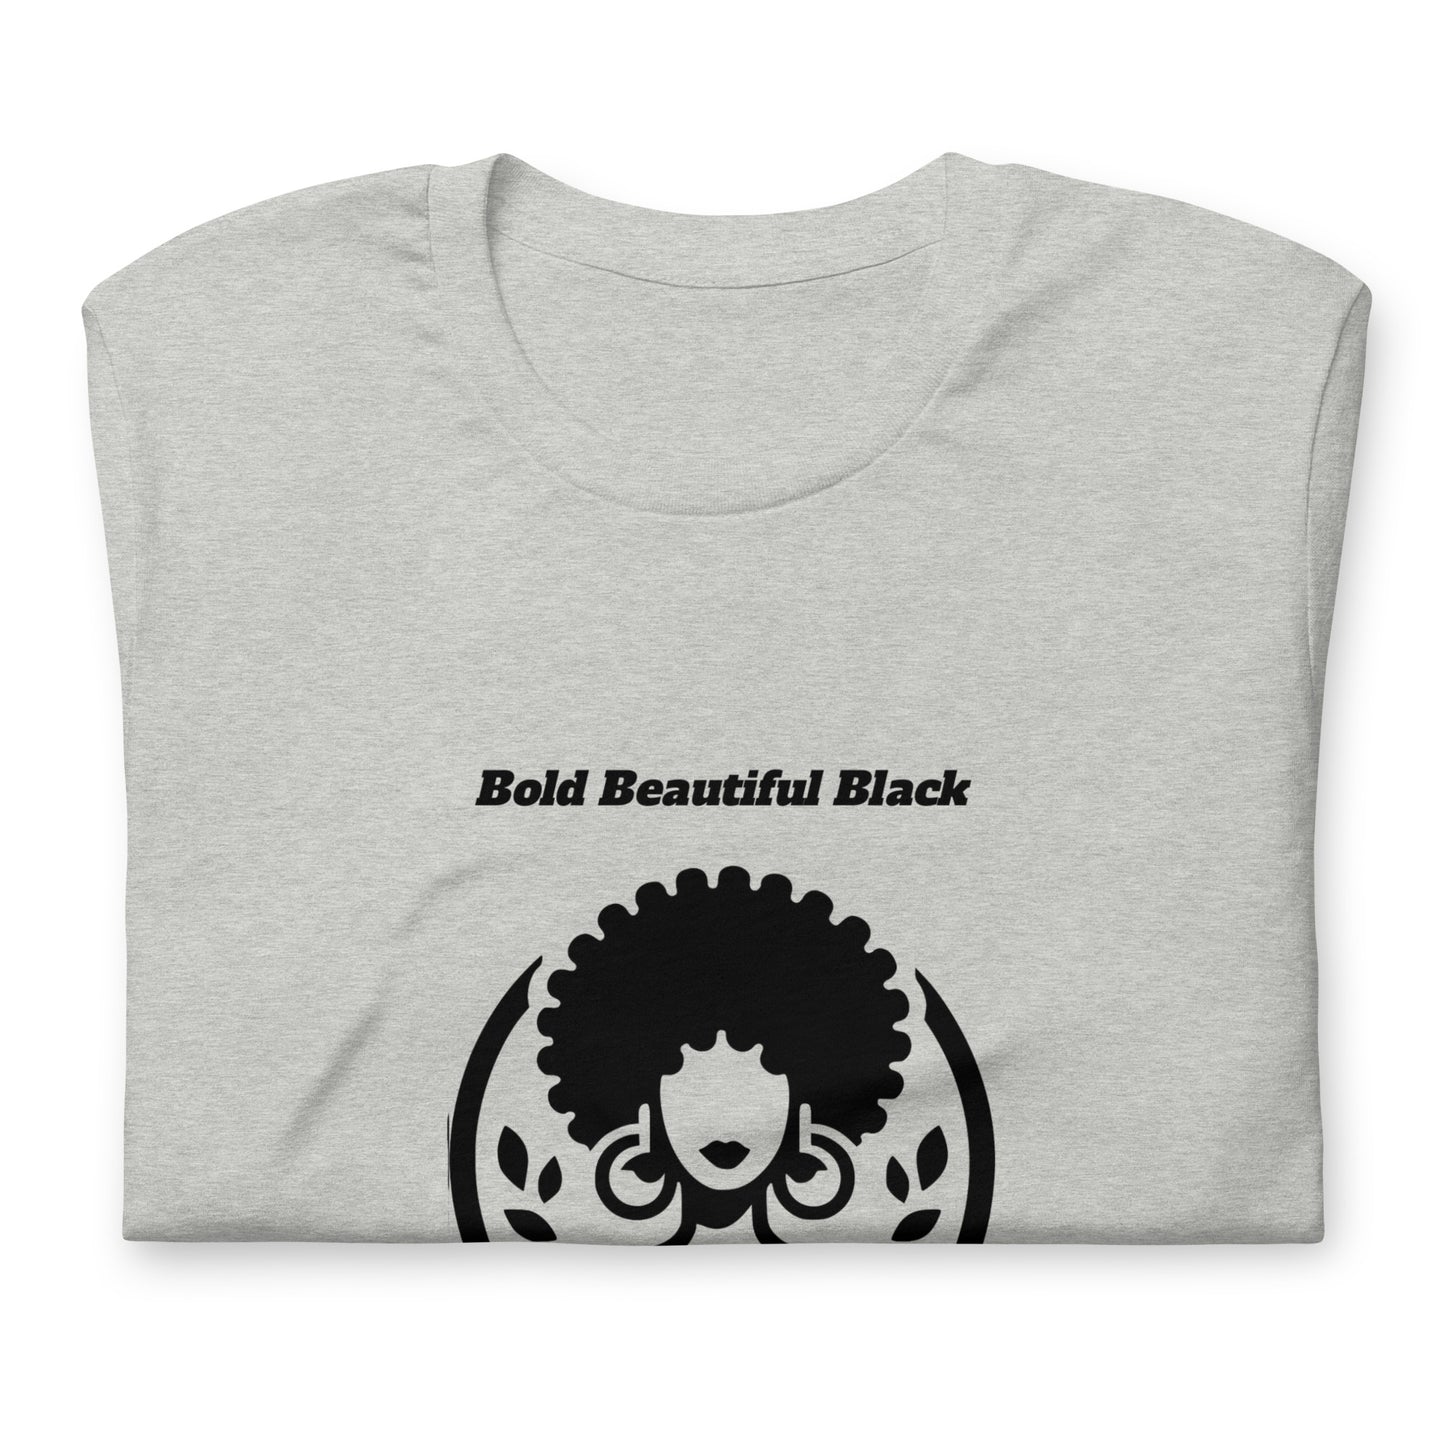 "Bold Beautiful Black" - Unisex t-shirt